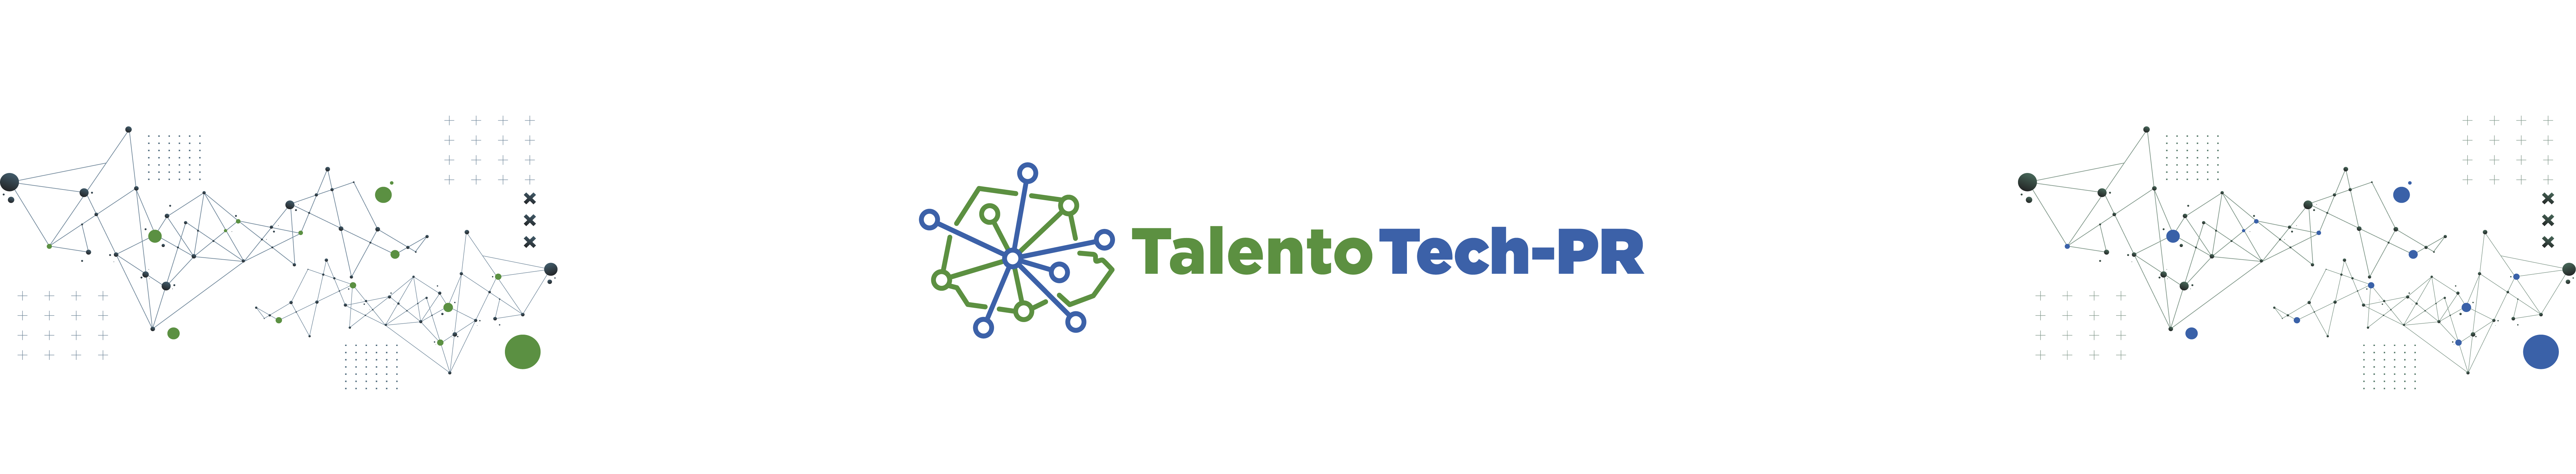 Talento Tech-PR